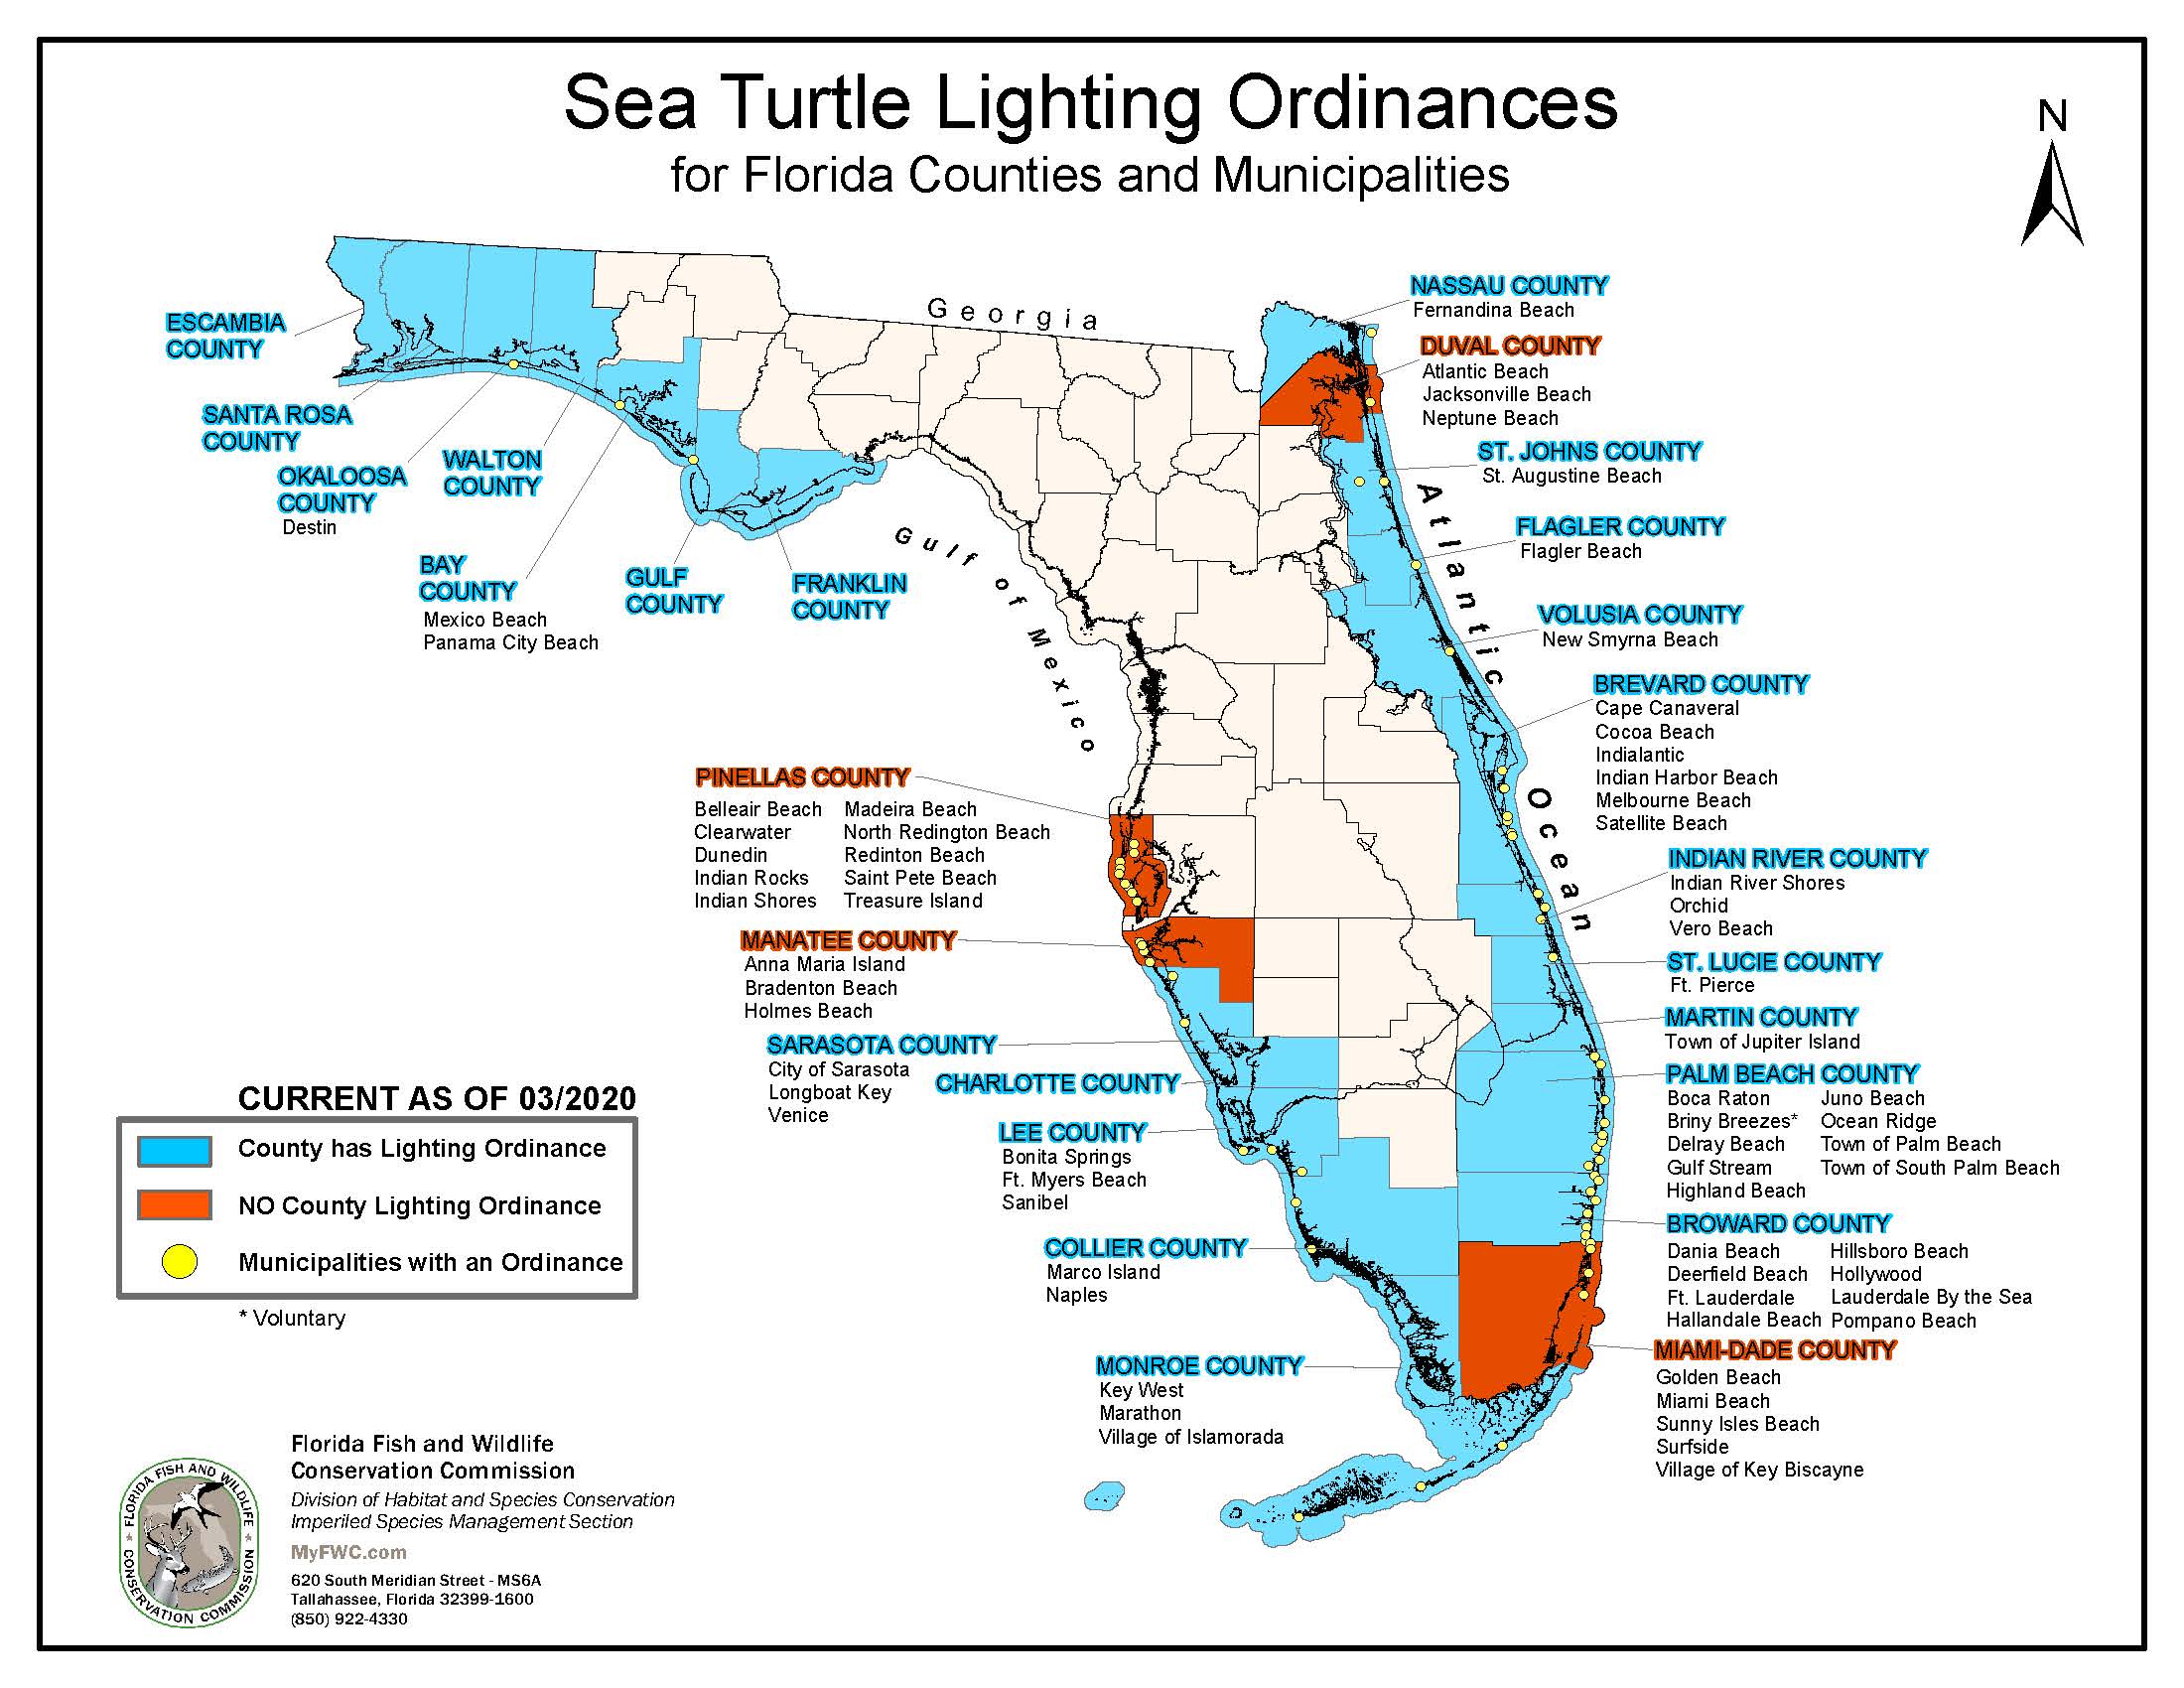 Sea turtle lighting ordinances for Florida counties and municipalities